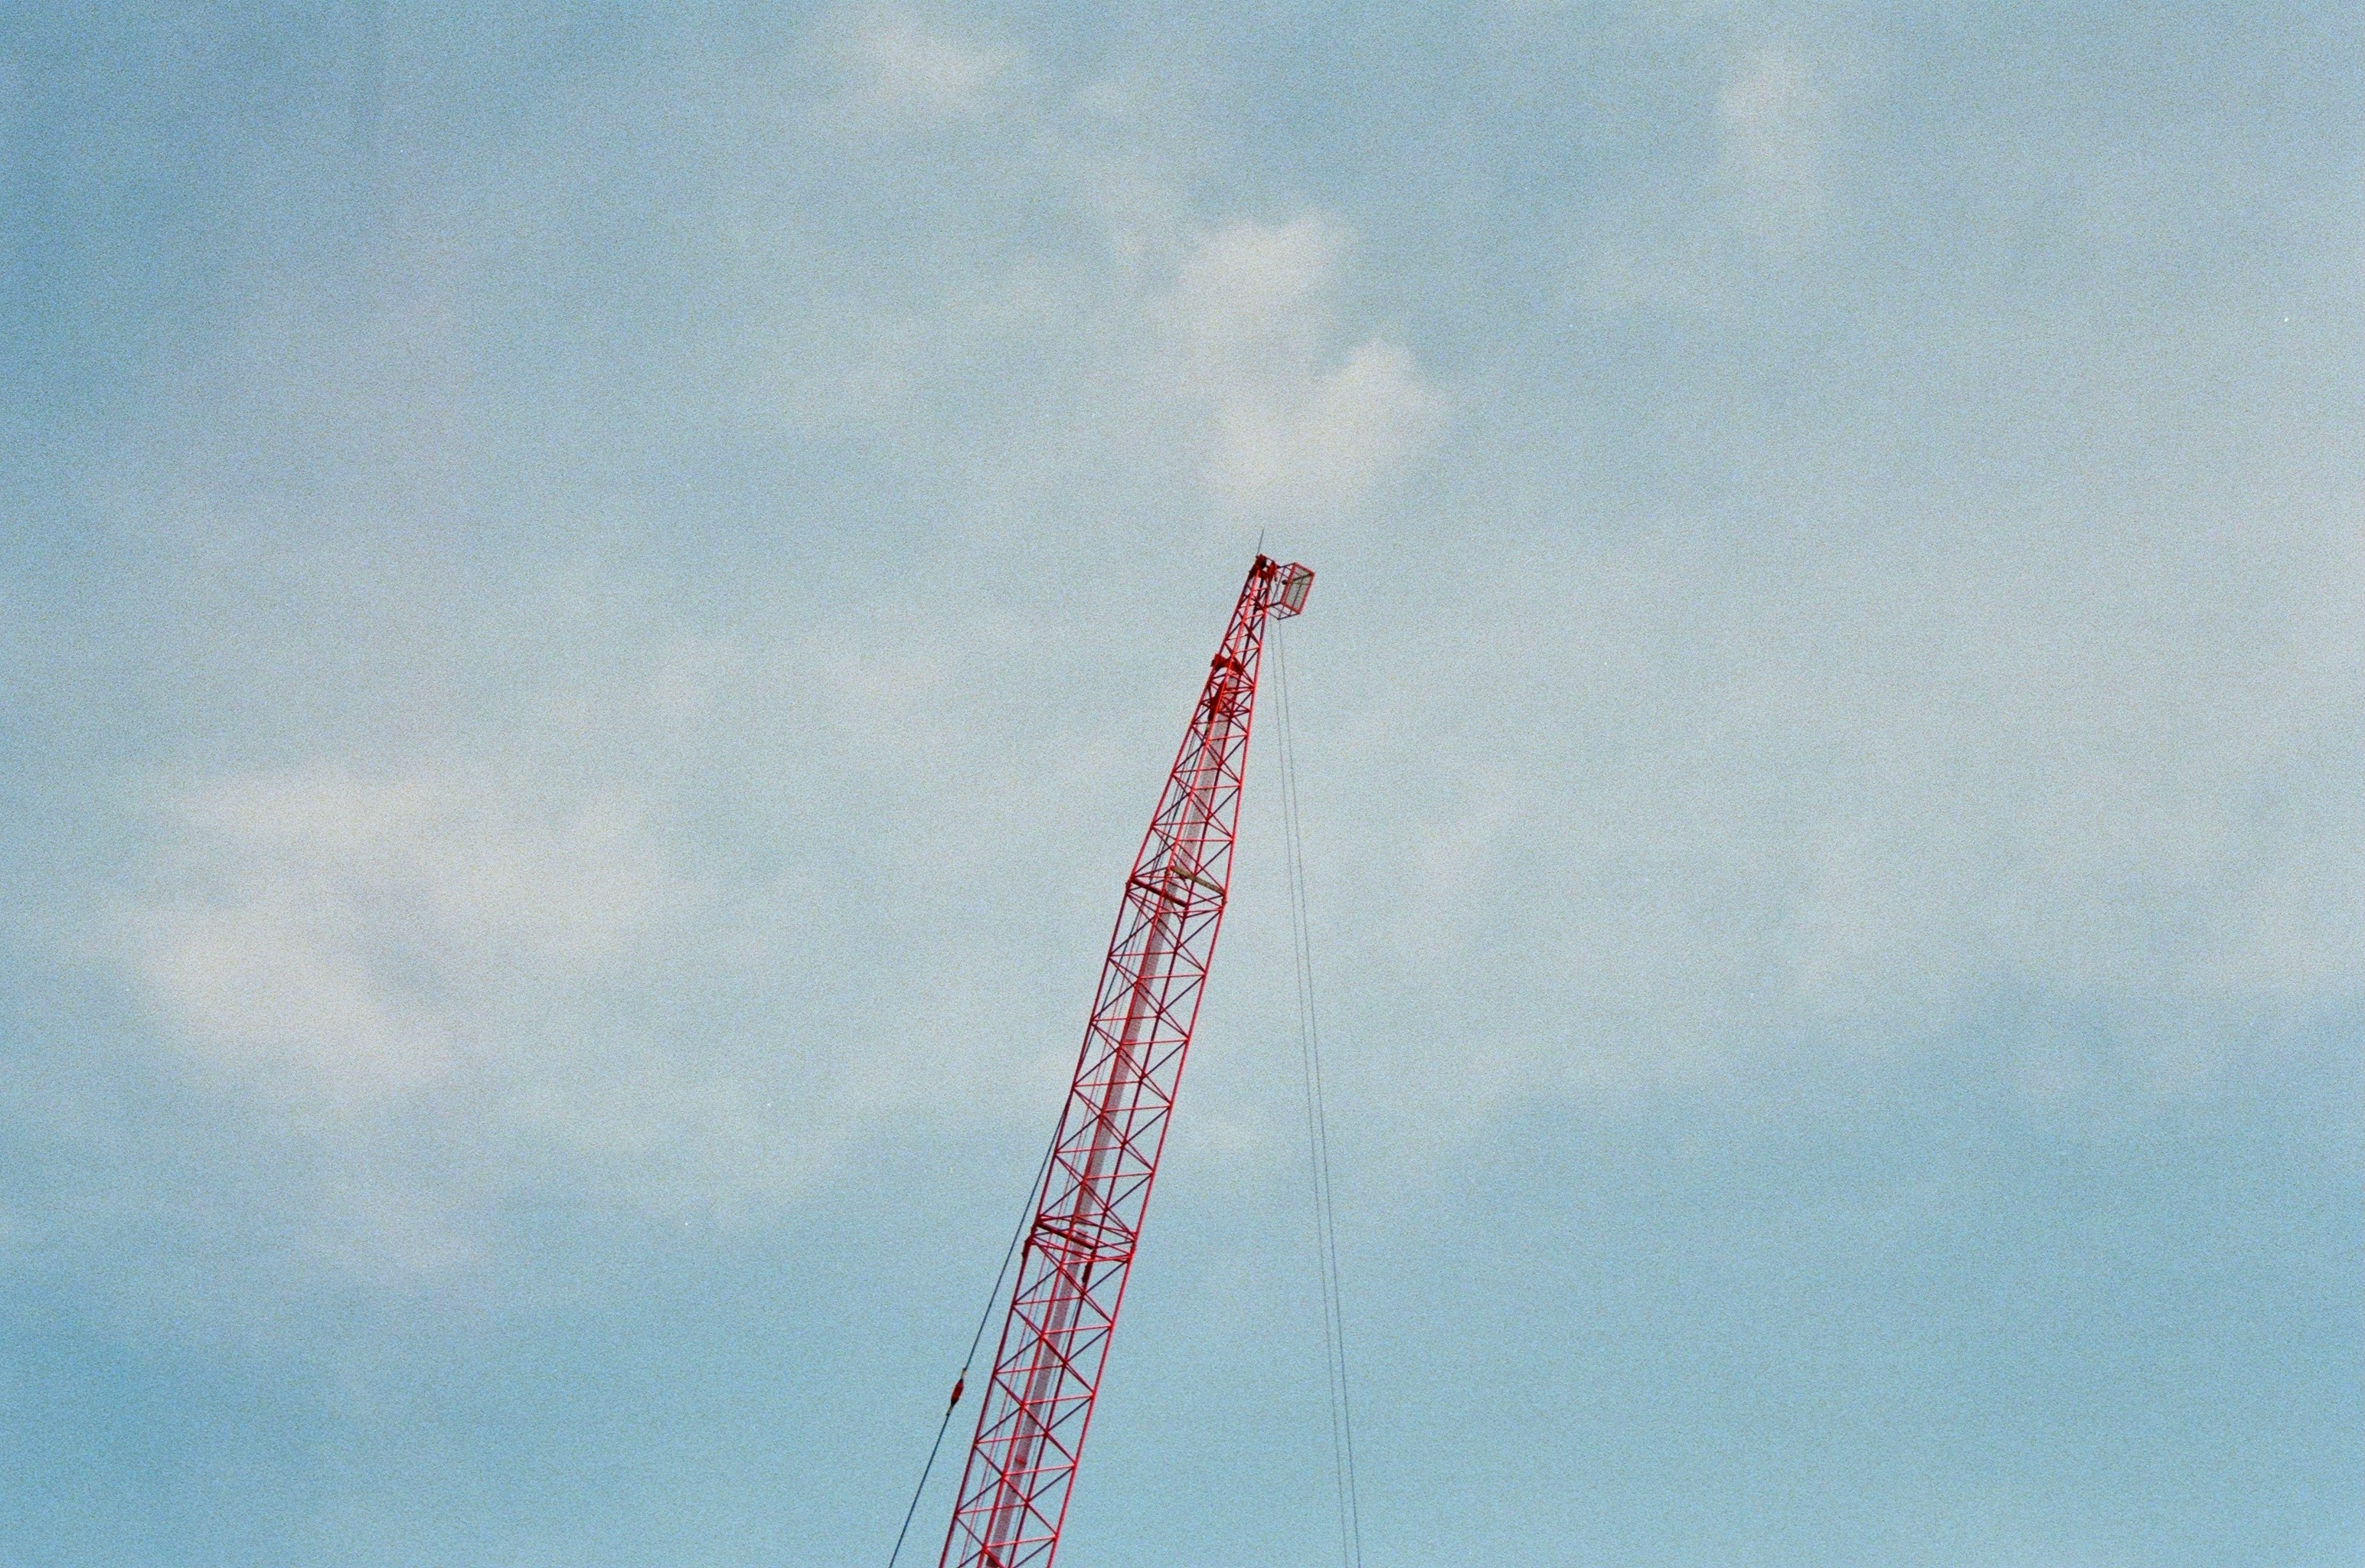 red metal crane under blue sky during daytime